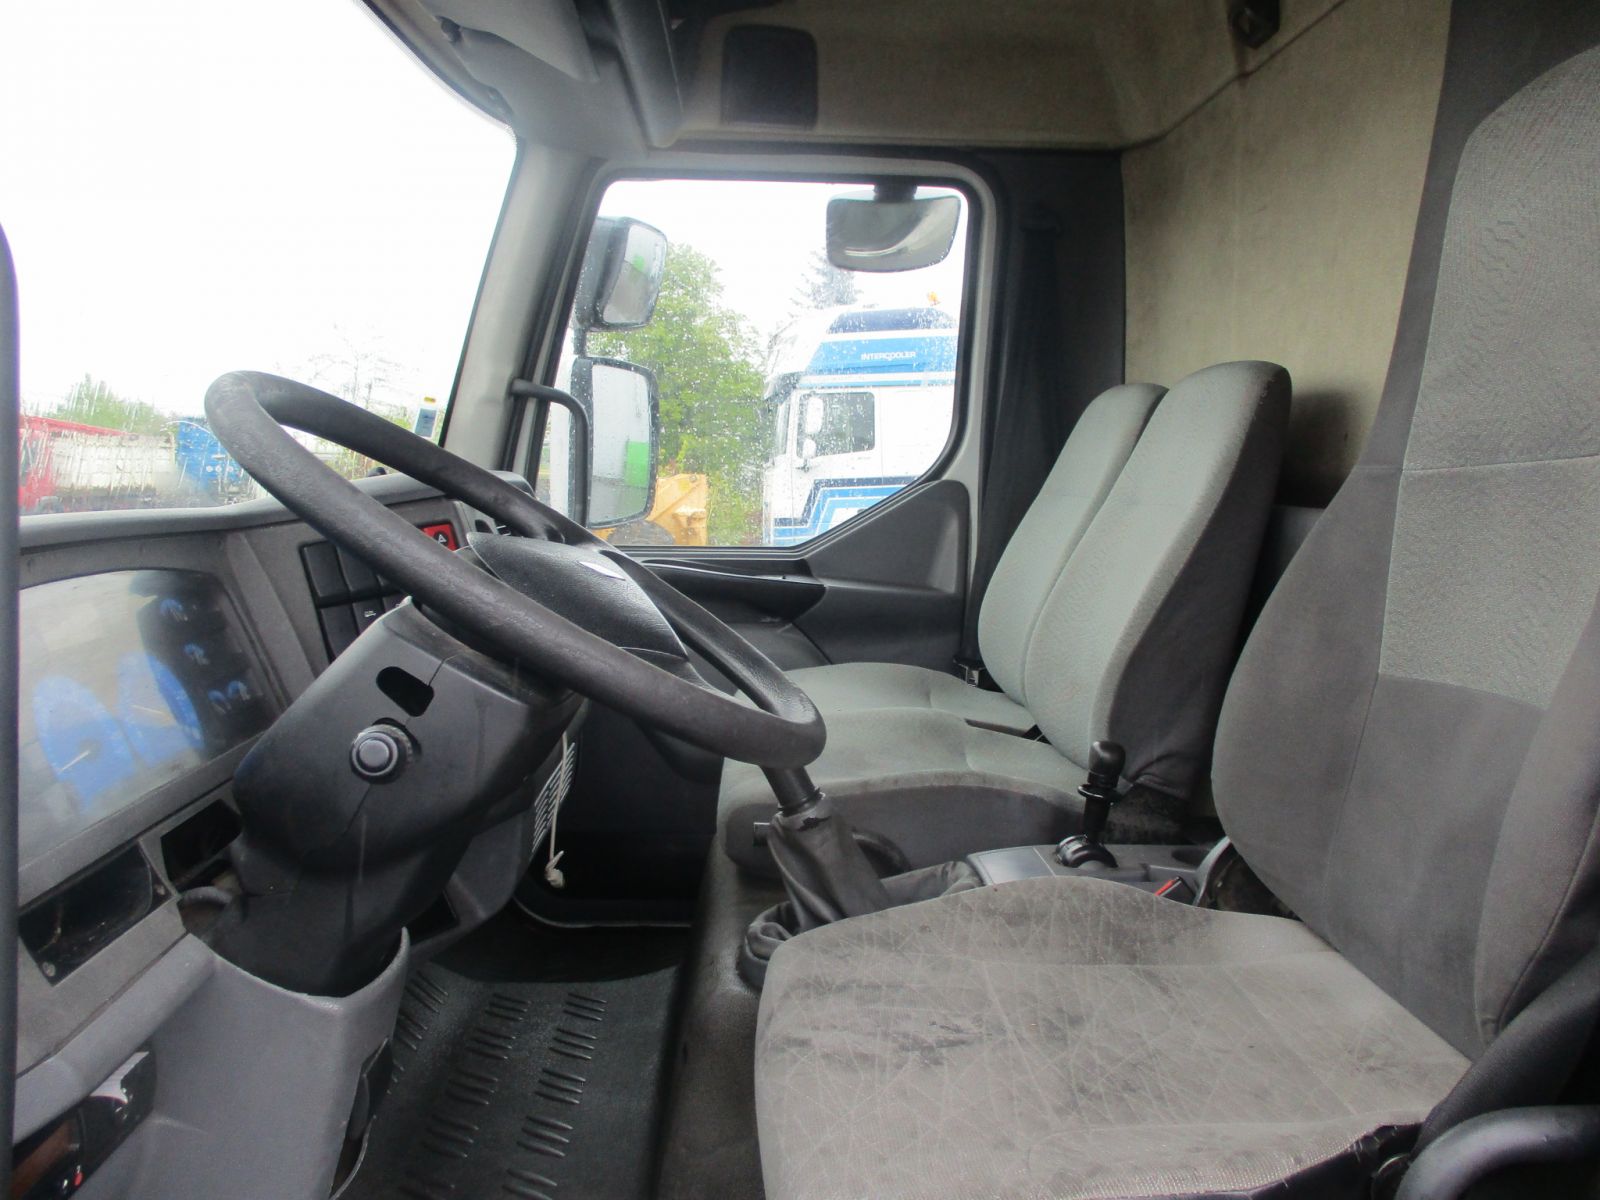  Unidades de camiones - RENAULT MIDLUM 180DXI  CAMION FOURGON (Belgique - Europe) - Houffalize Trading s.a.